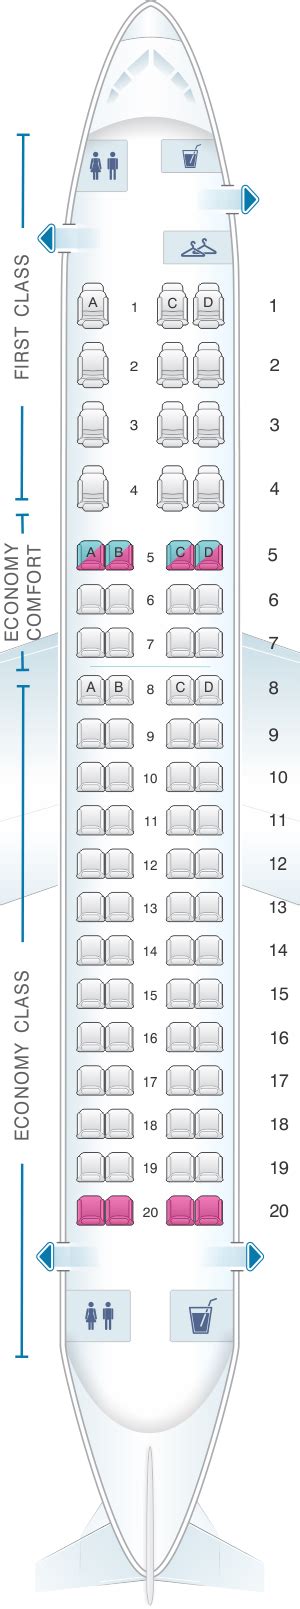 embraer 175 delta seating chart